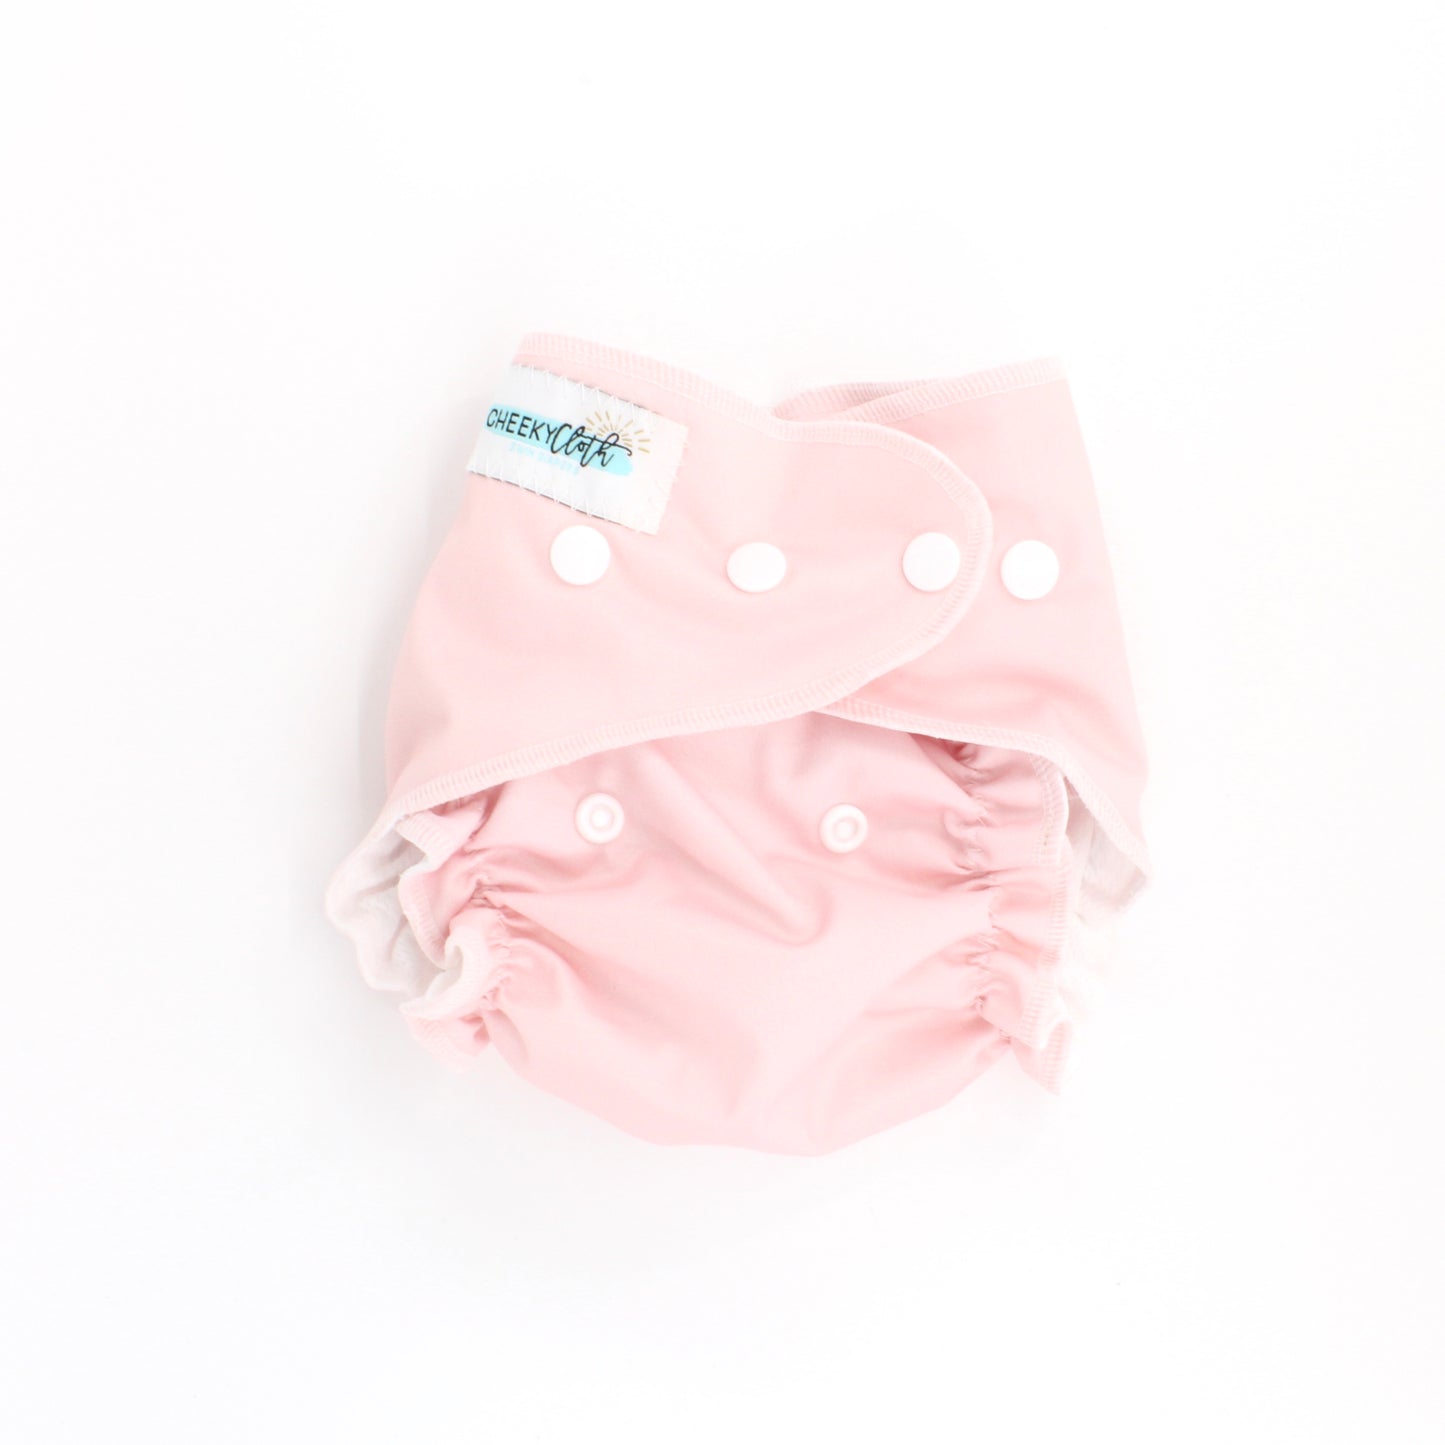 Cheeky Cloth One Size Reusable Swim Diaper "Pink Salt”